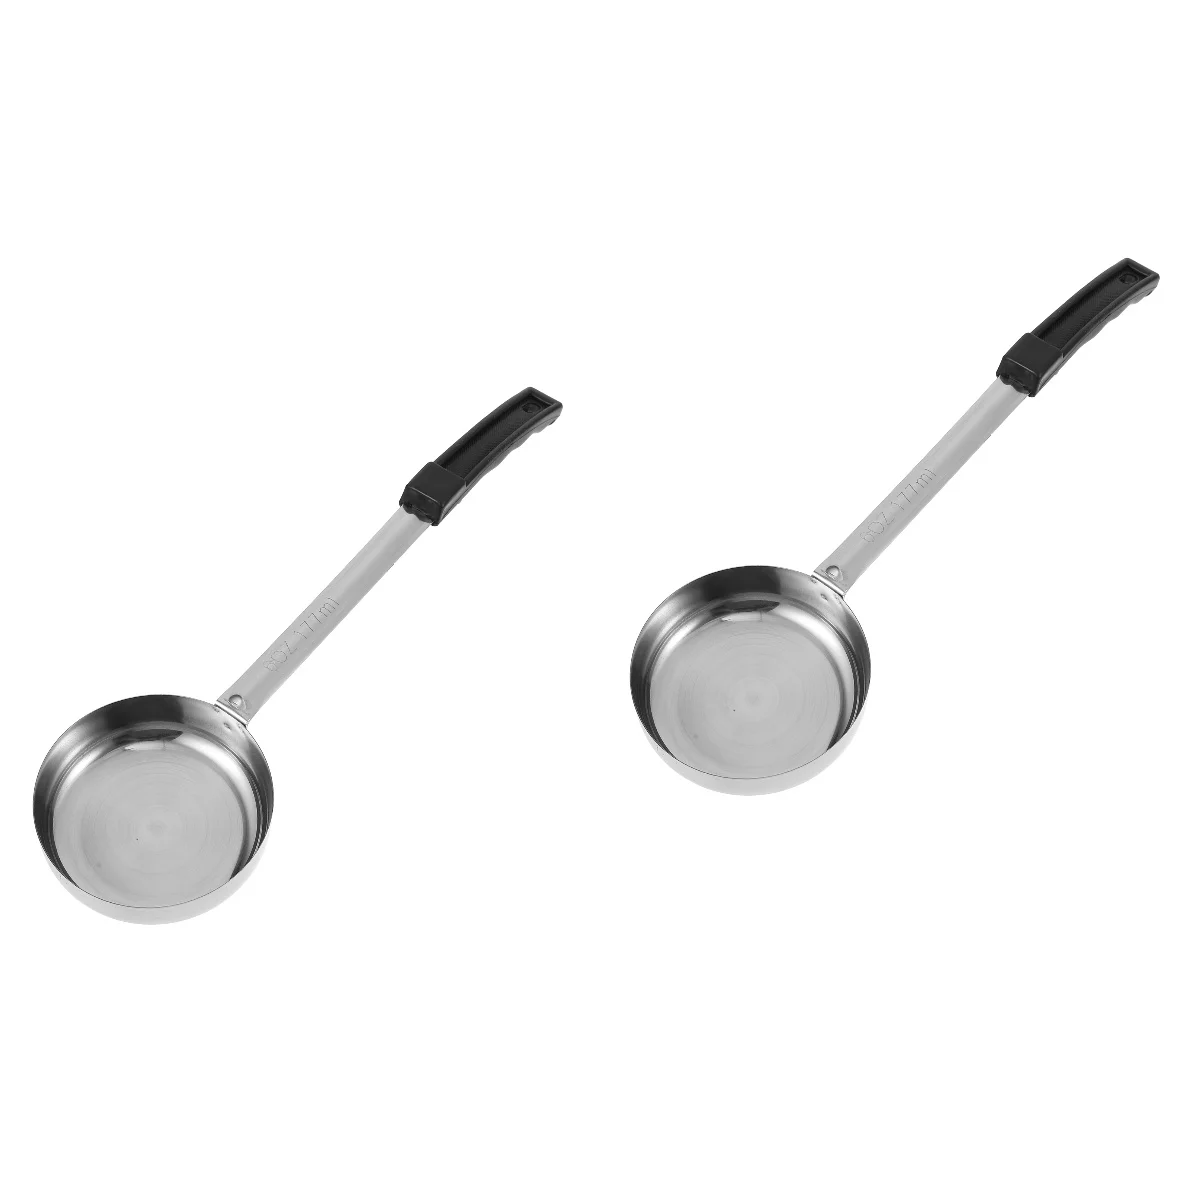 

Ladle Spoon Soup Serving Portion Portioner Steel Stainless Scoop Handlesauce Ladles Salad Gravy Cooking Dressing Kitchen Spoons